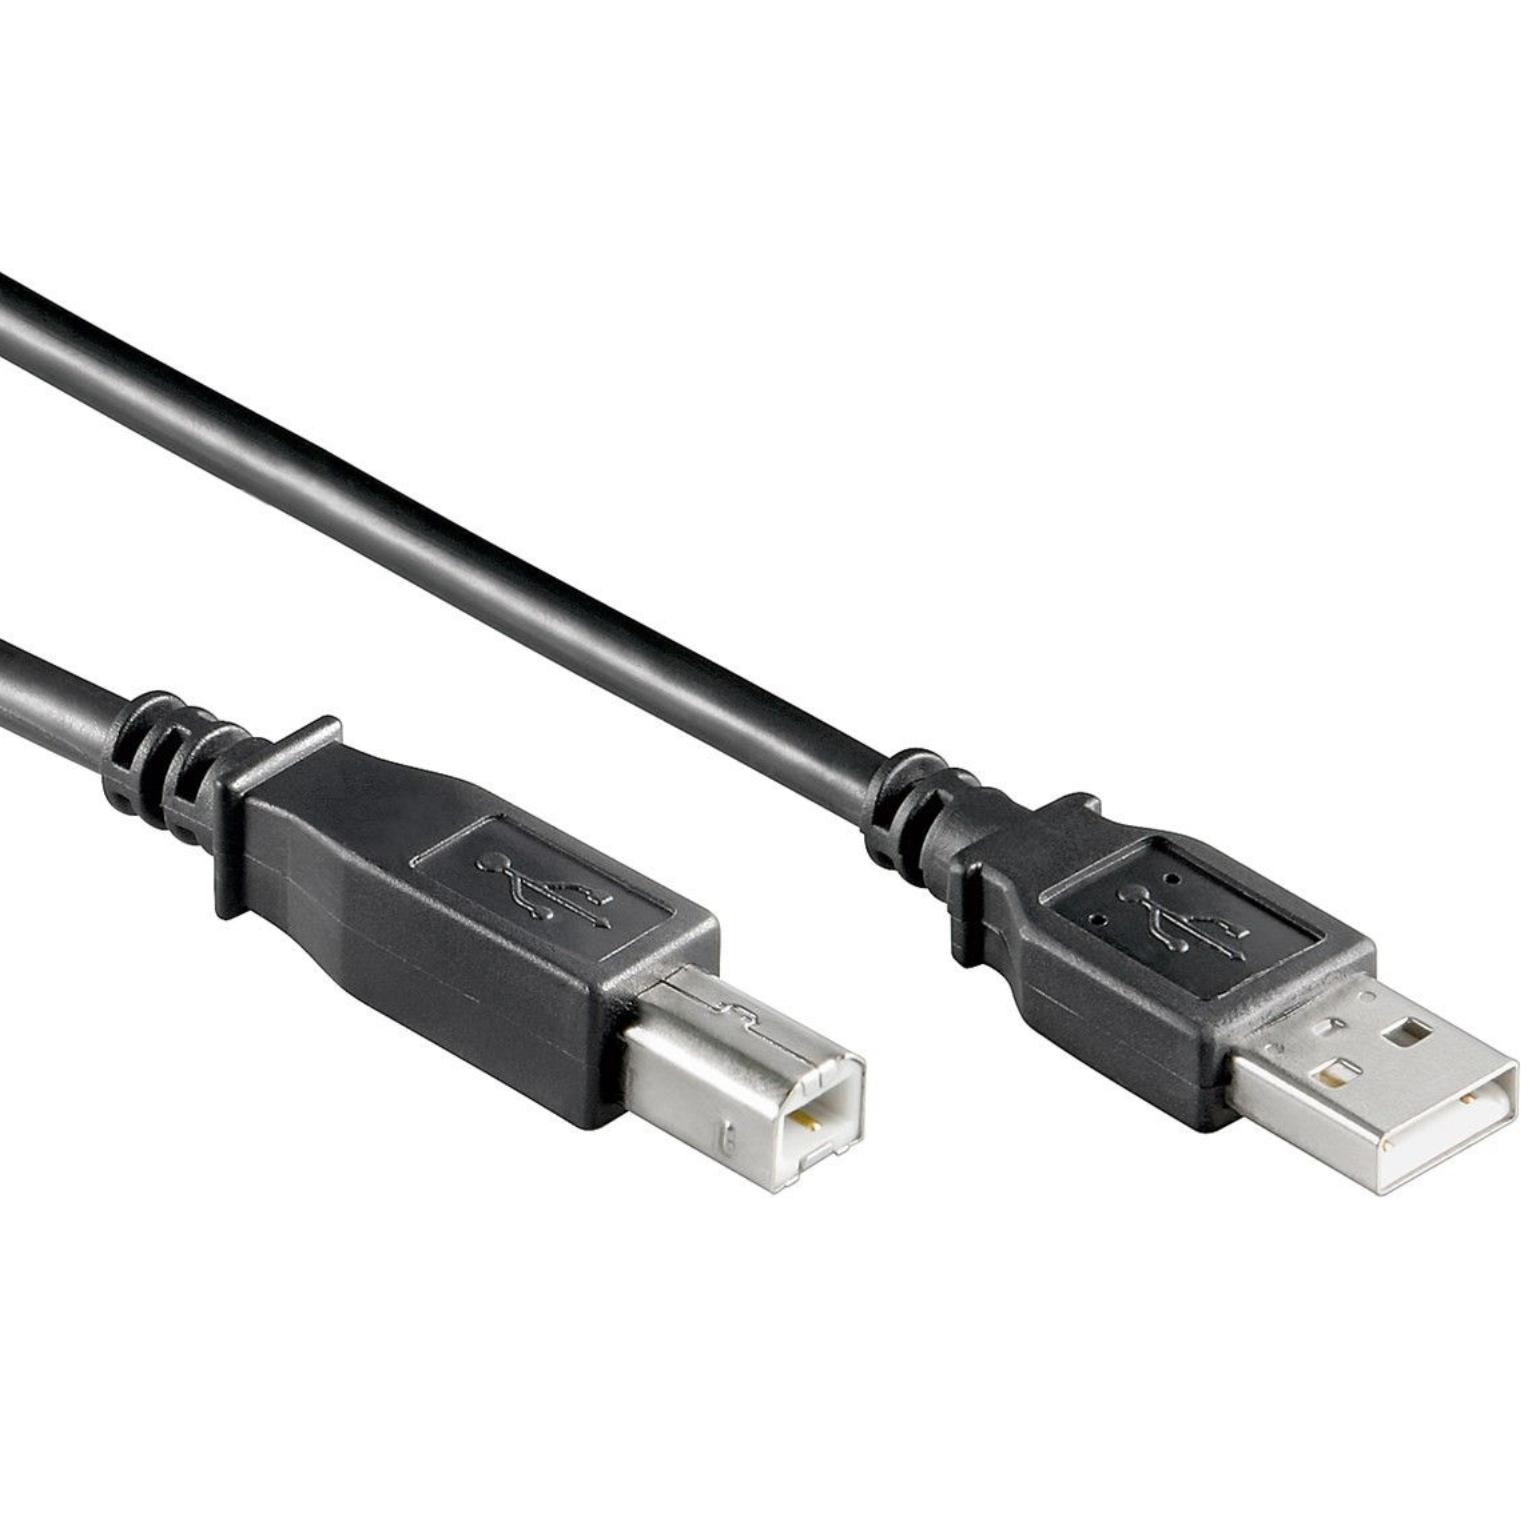 USB-B datakabel - 5 meter - Allteq